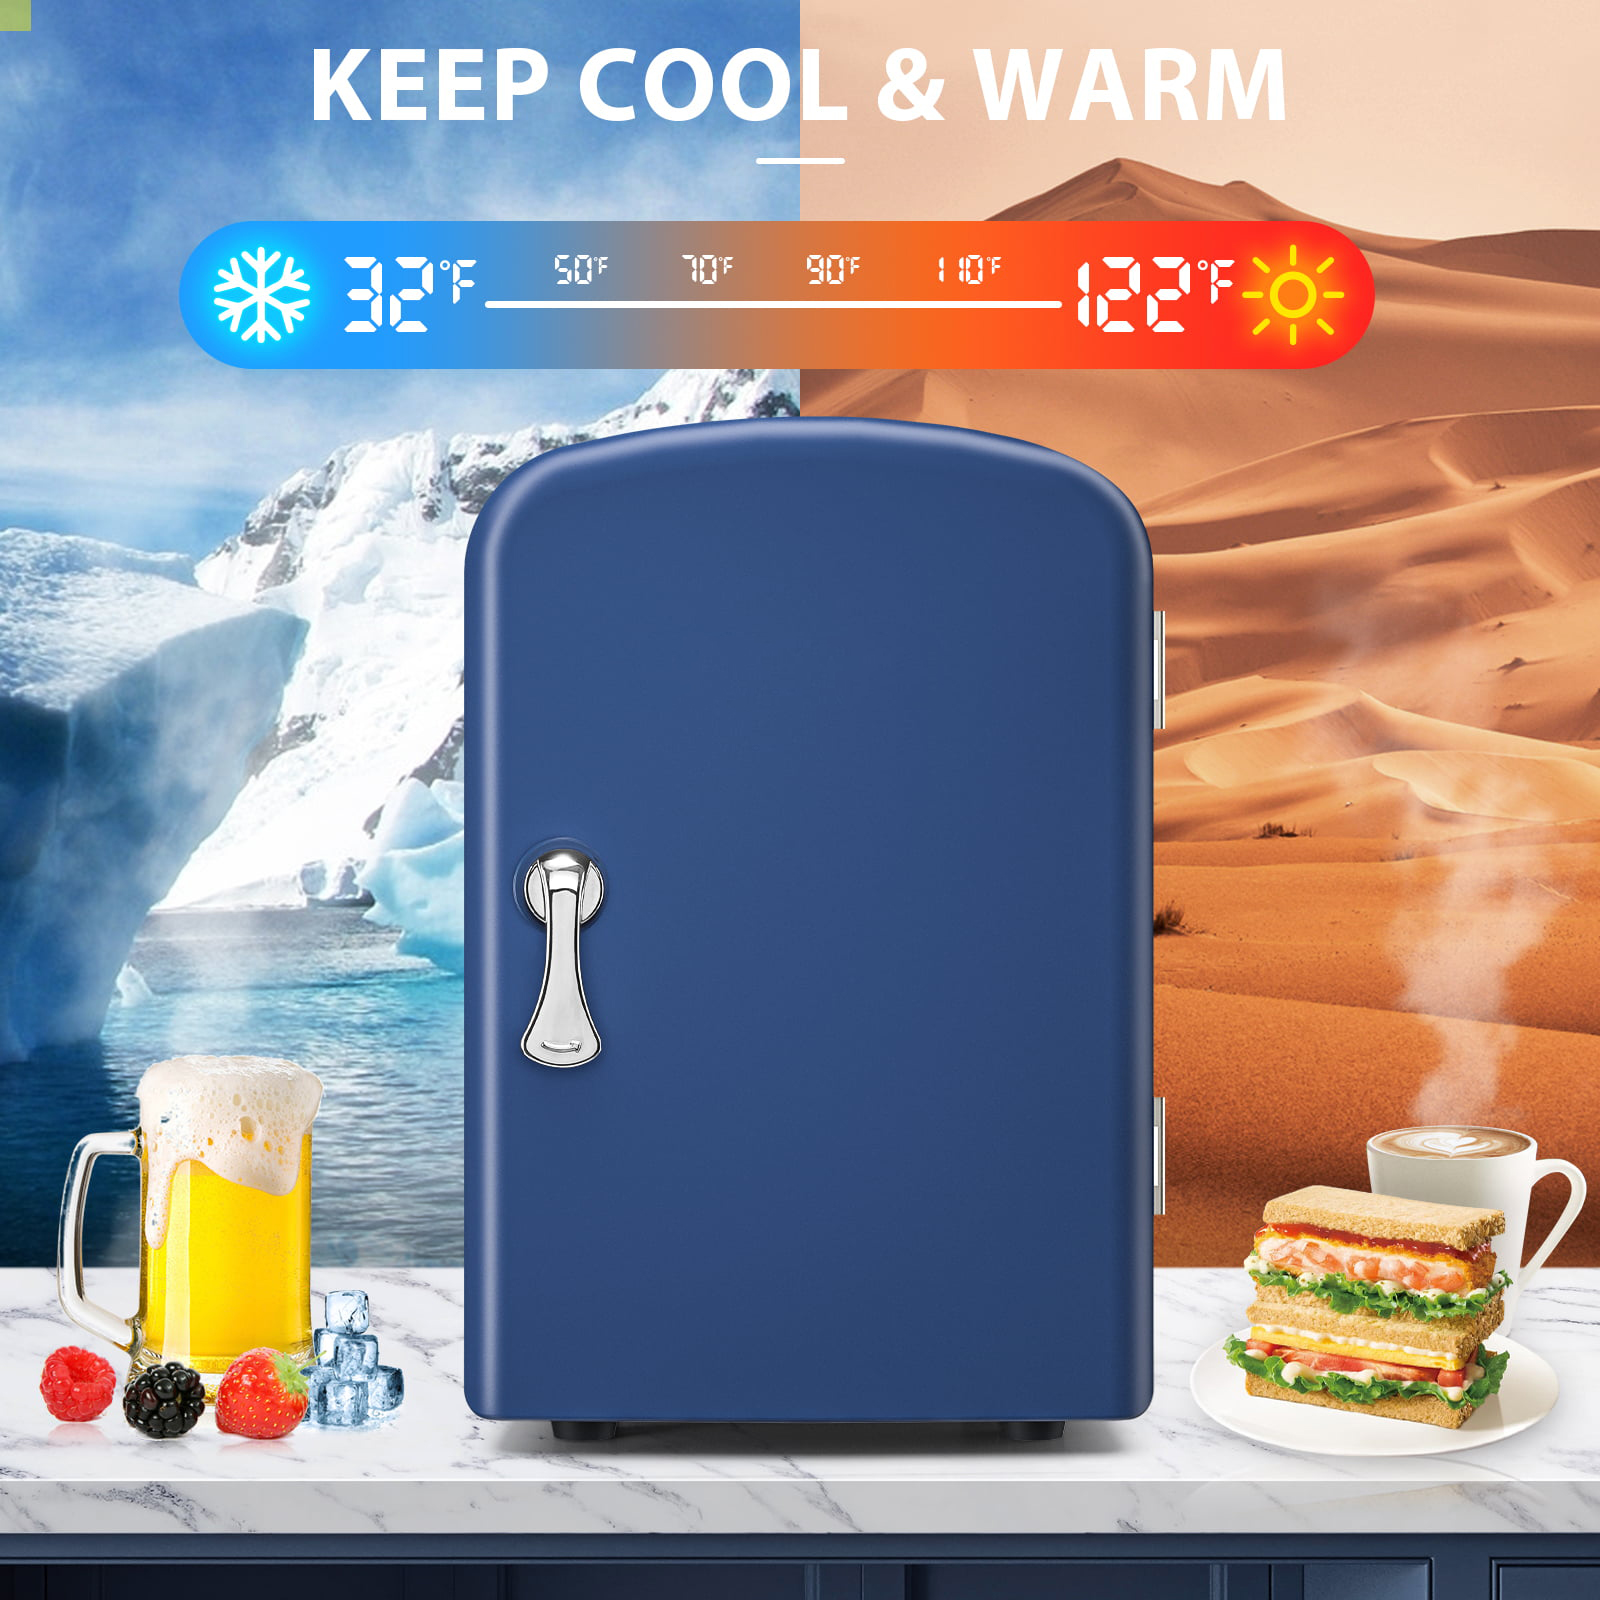 Portable Personal Fridge, Freon Free 4 Liter Mini Fridge with Cooling and Warming, AC/DC Energy Saving Refrigerator, Blue - image 3 of 7